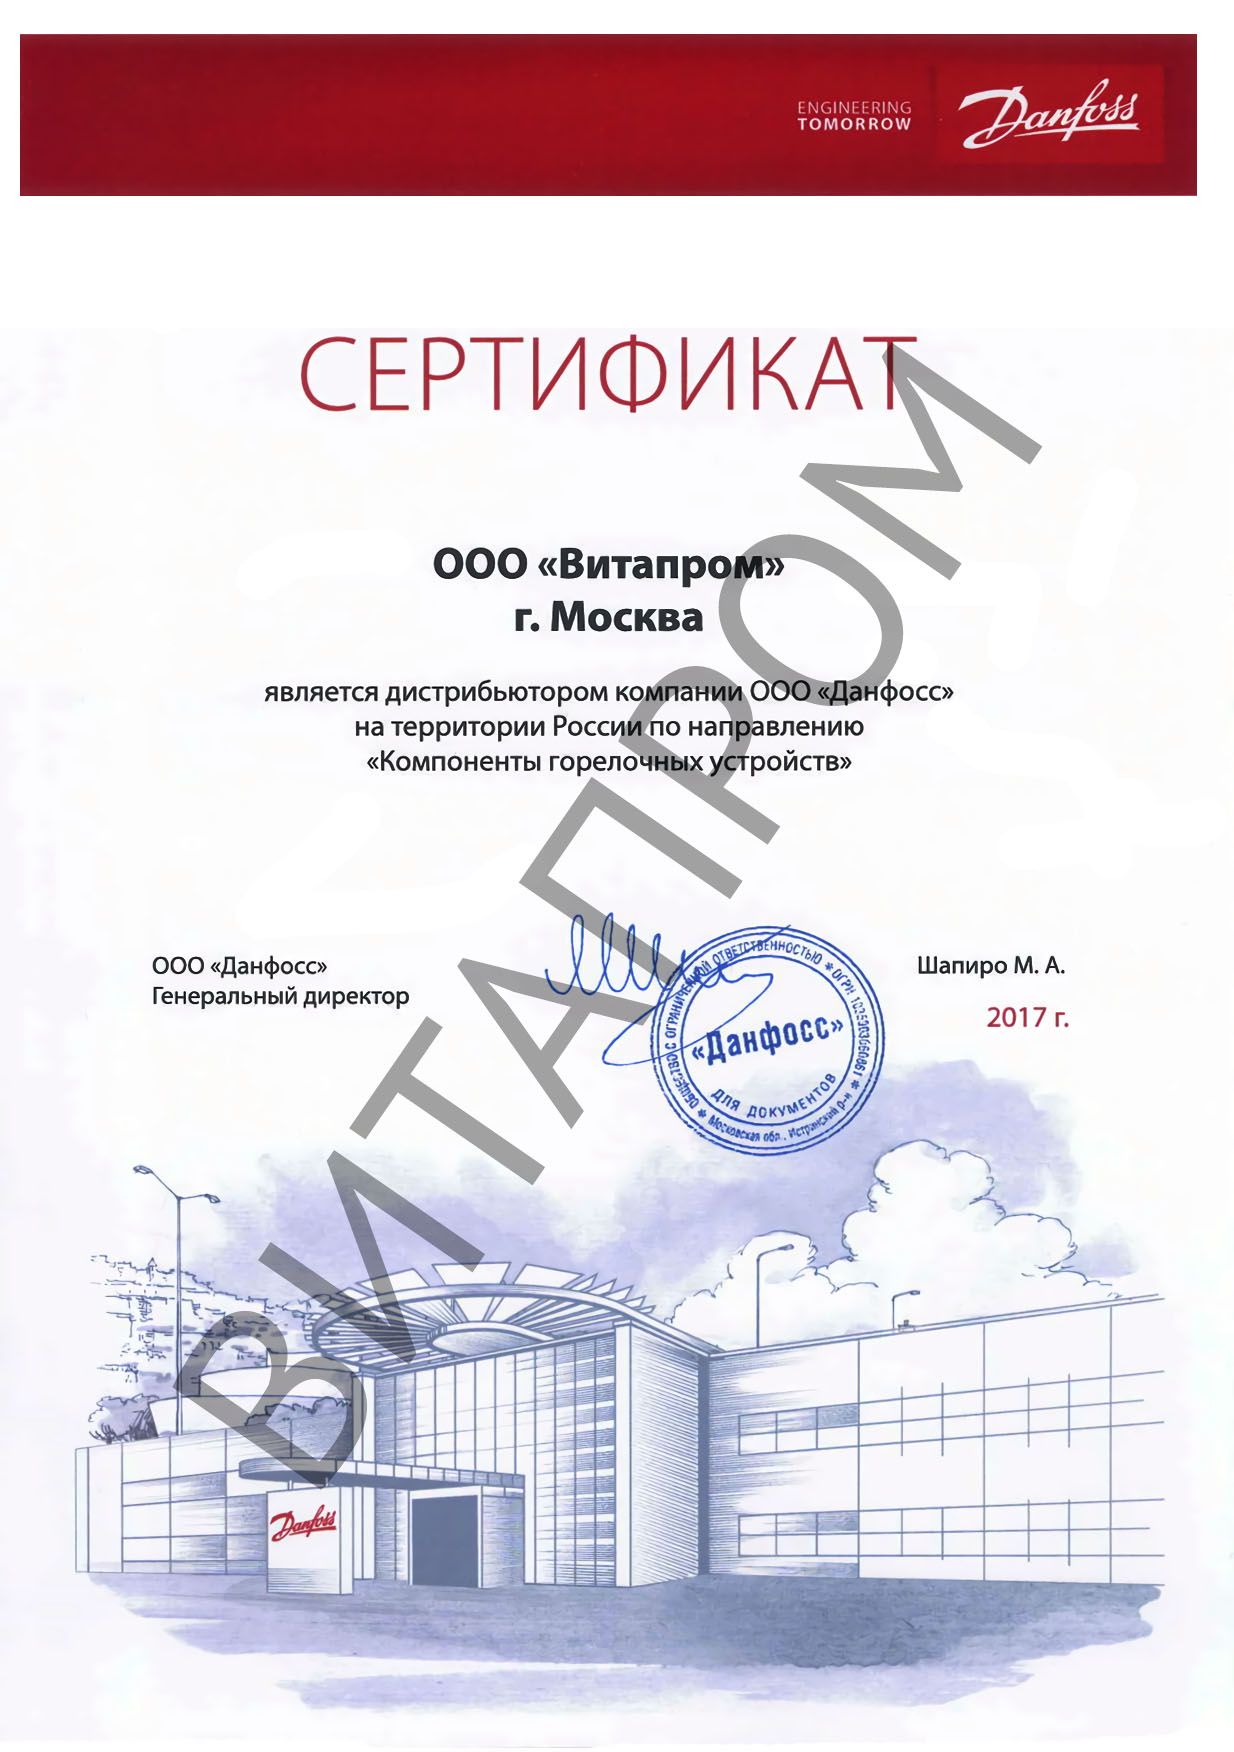 Сертификат дистрибьютора Danfoss 2017